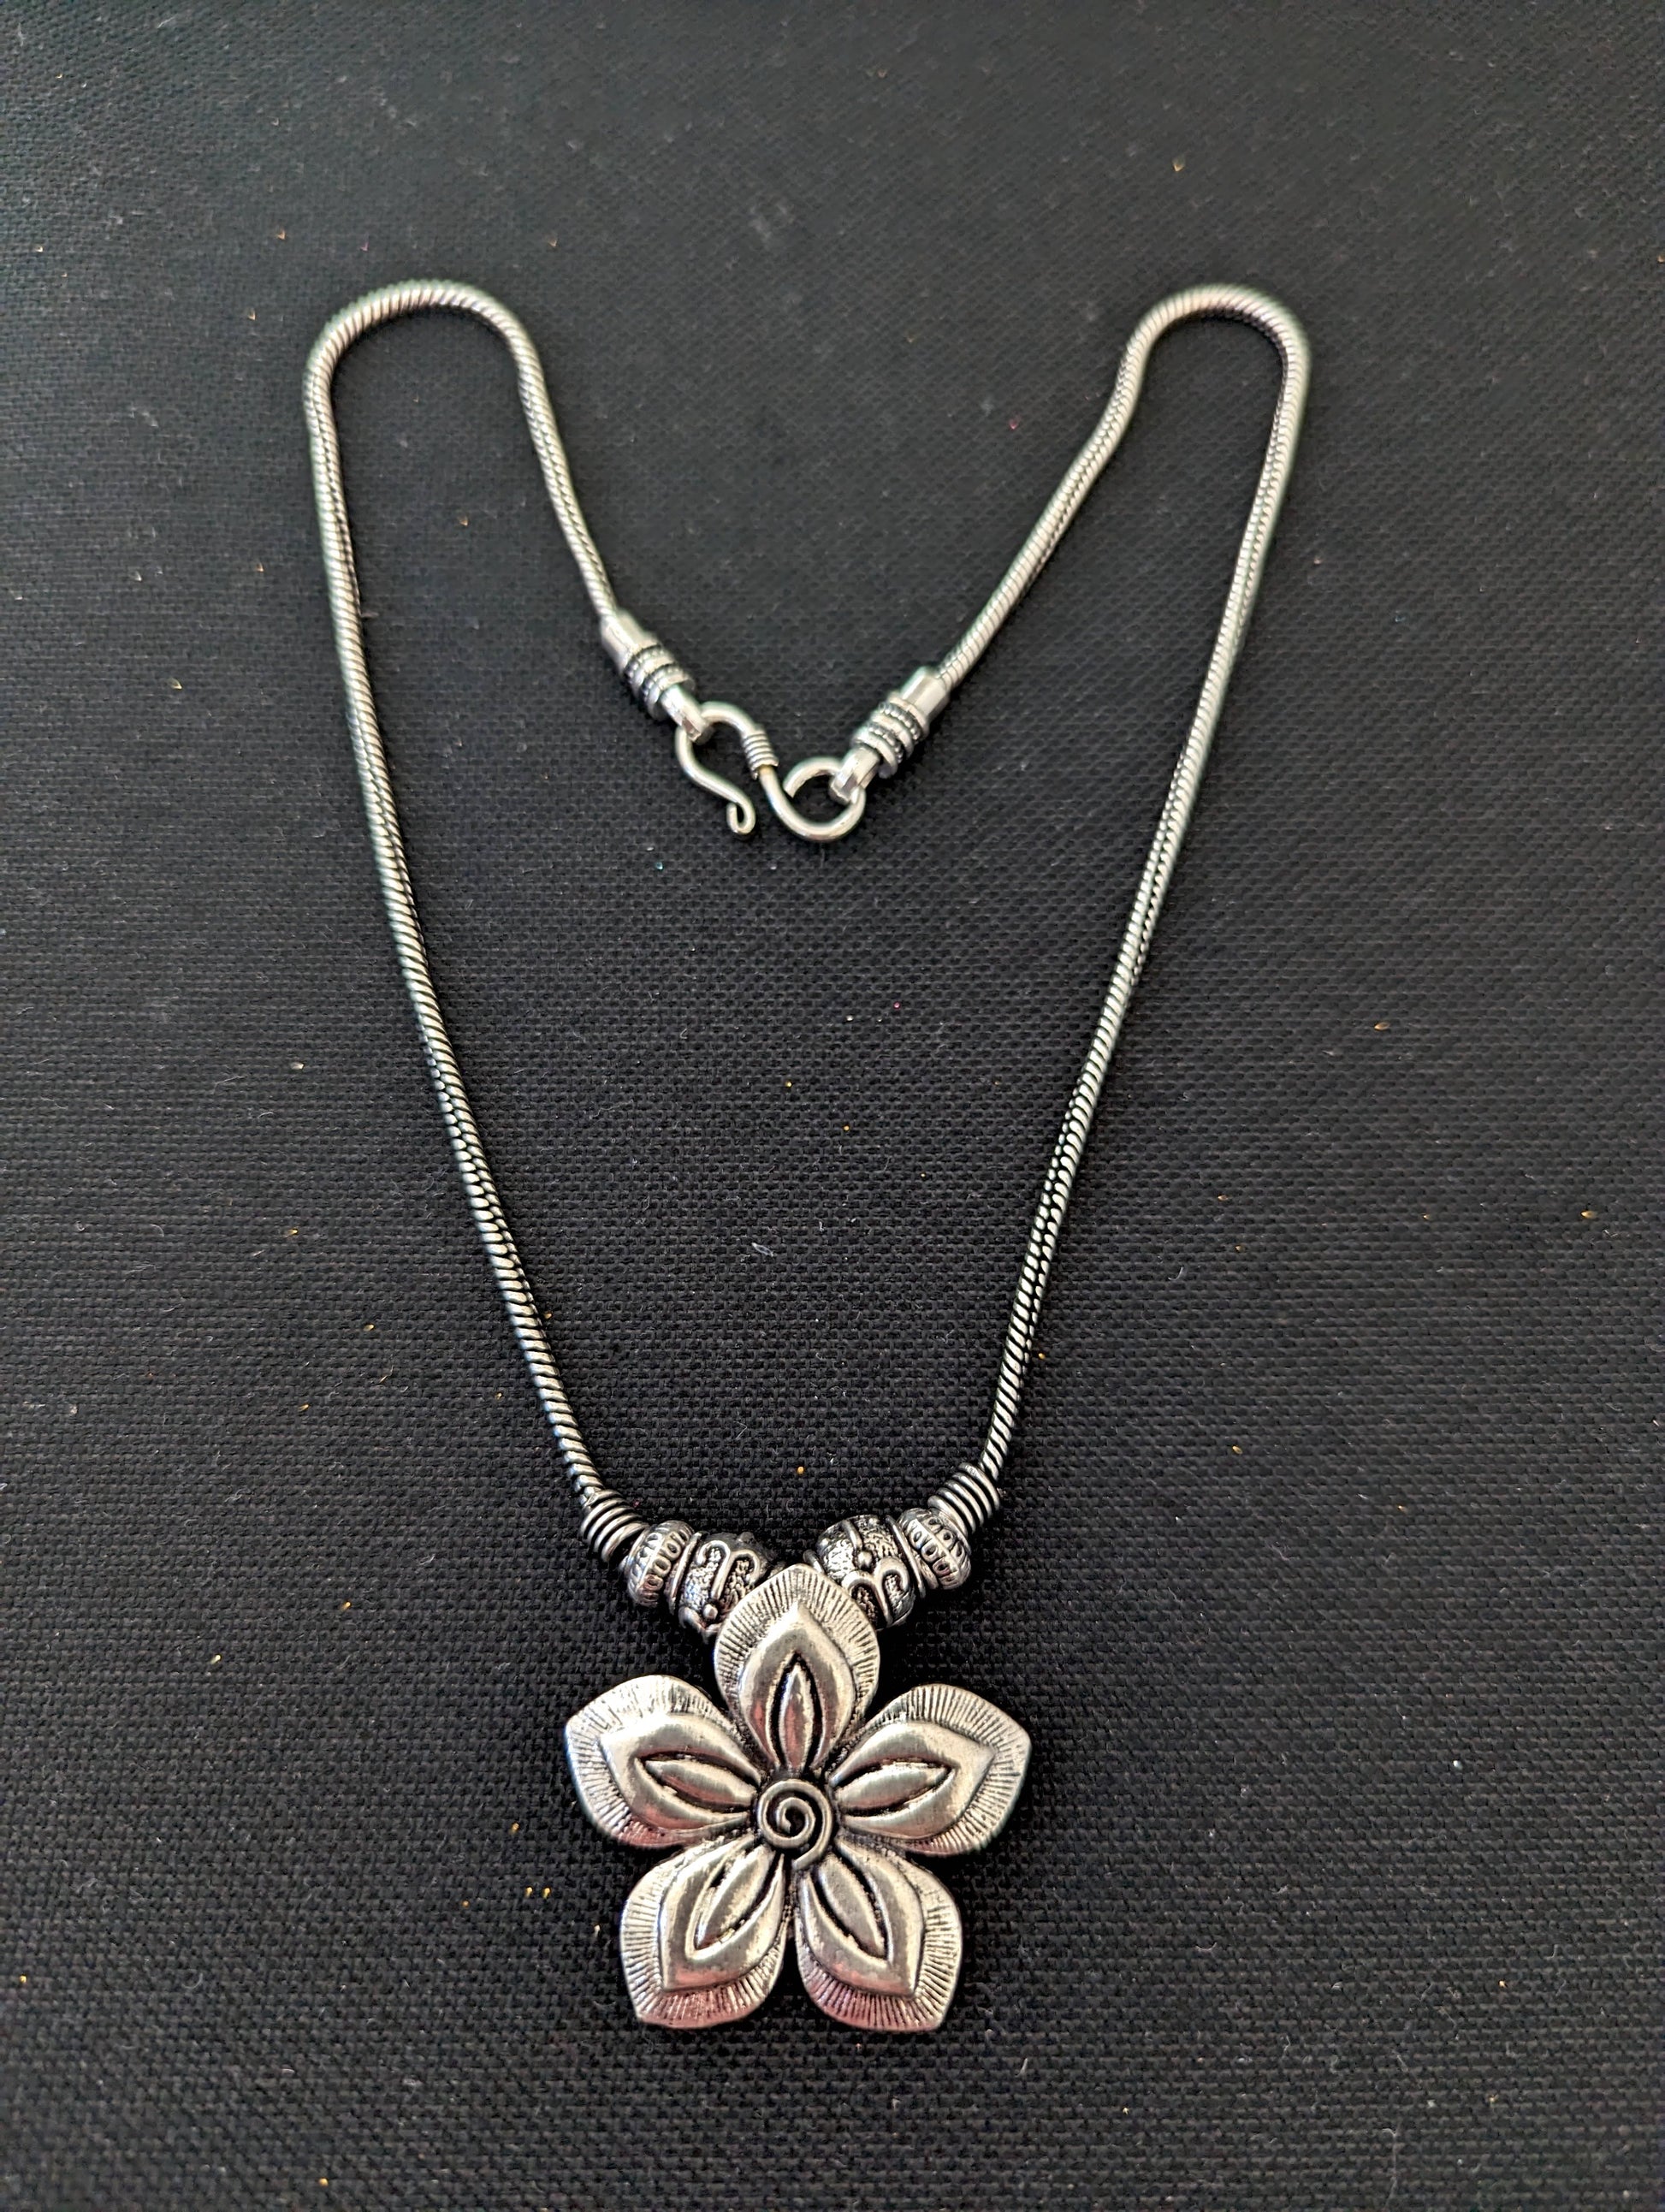 Silver oxidized Pendant Necklace - 3 designs - Simpliful